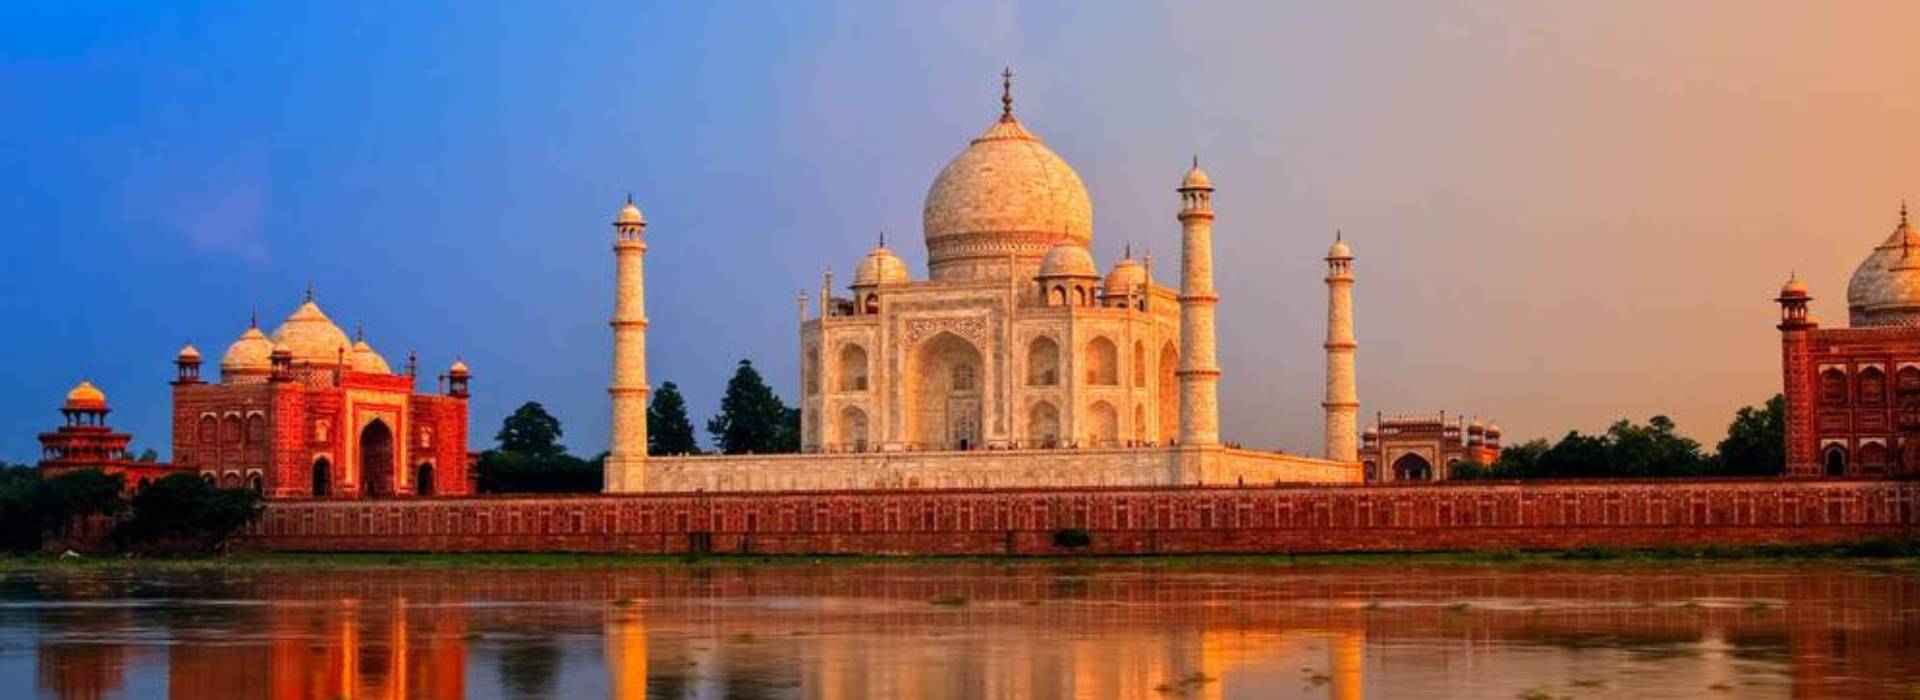 Taj Mahal Tour With Heritage Walk